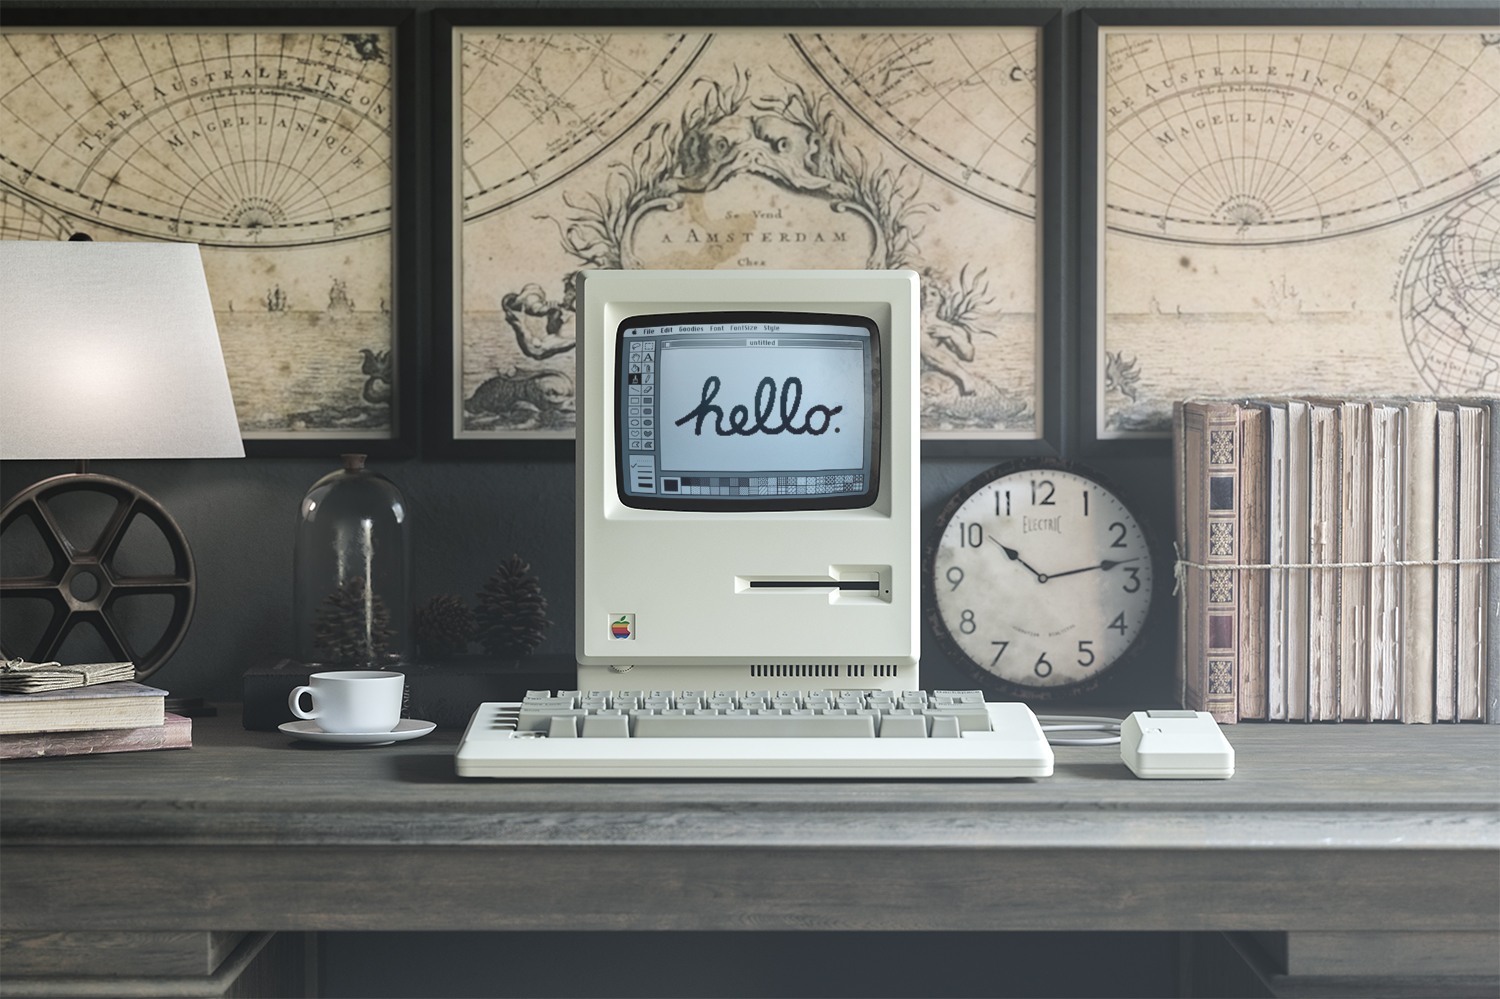 1984 Apple Macintosh Mockup